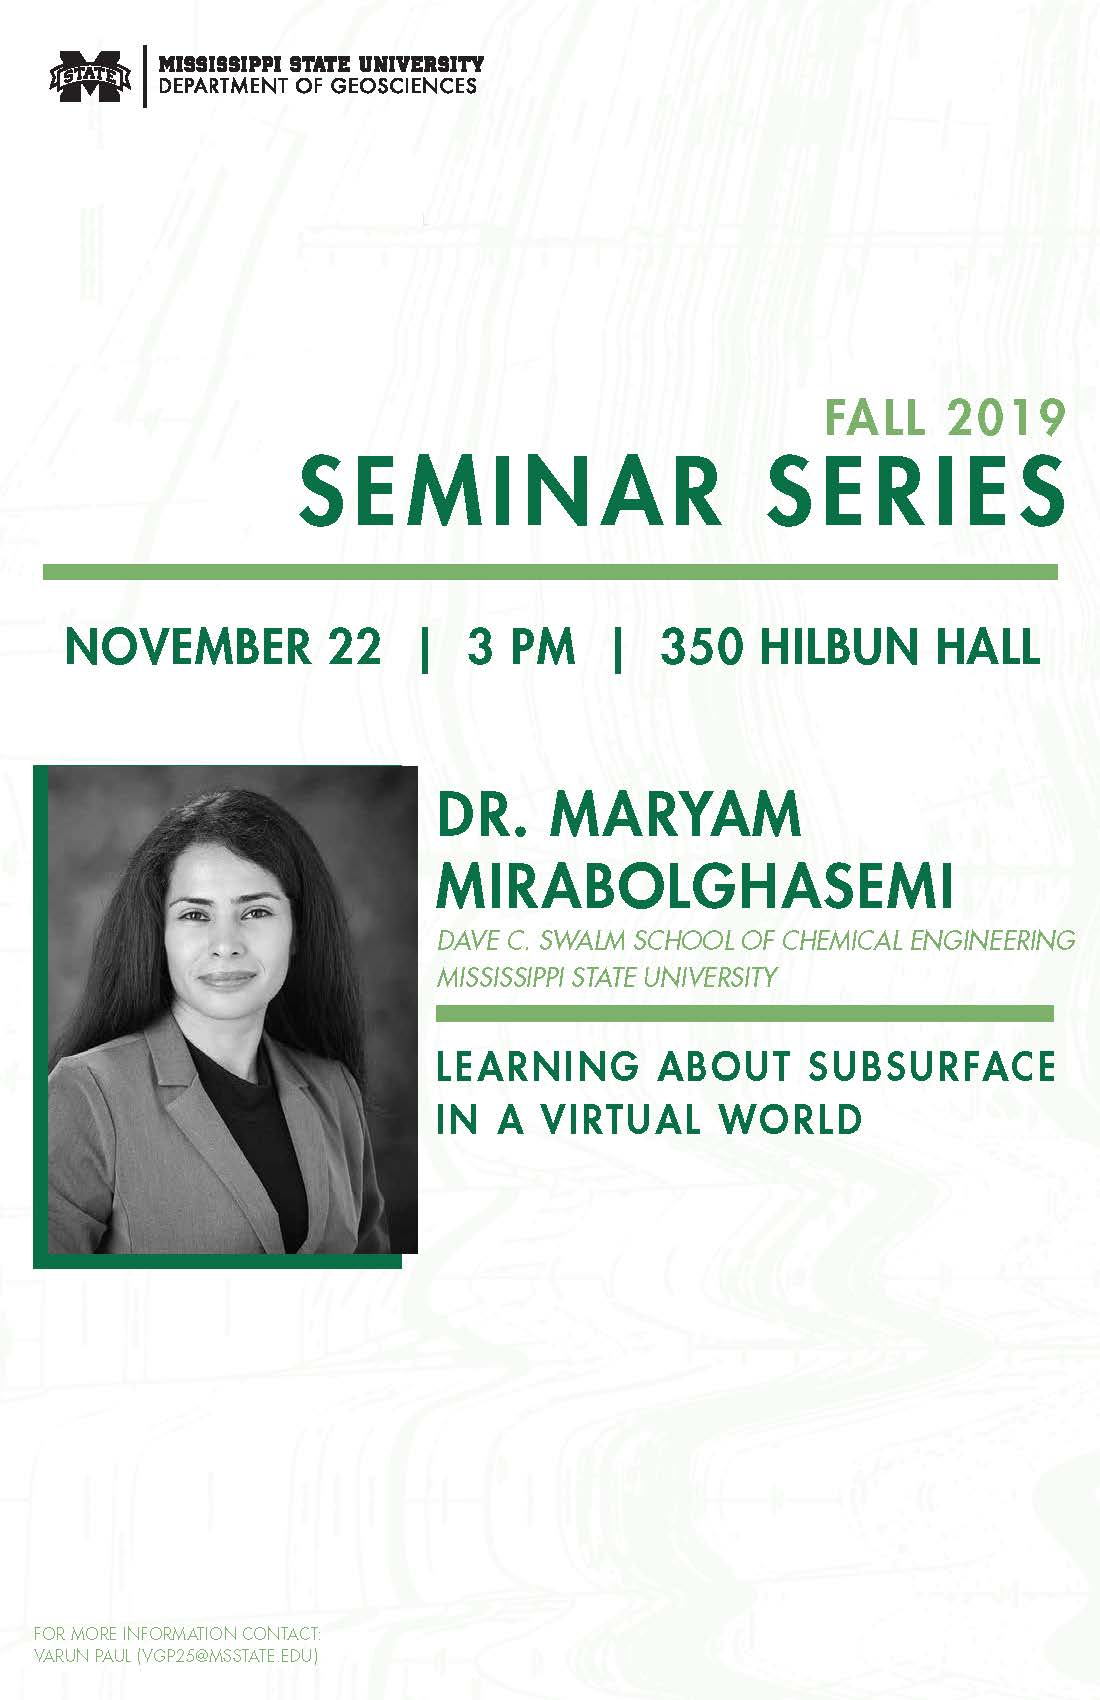 Dr. Maryam Mirabolghasemi seminar poster